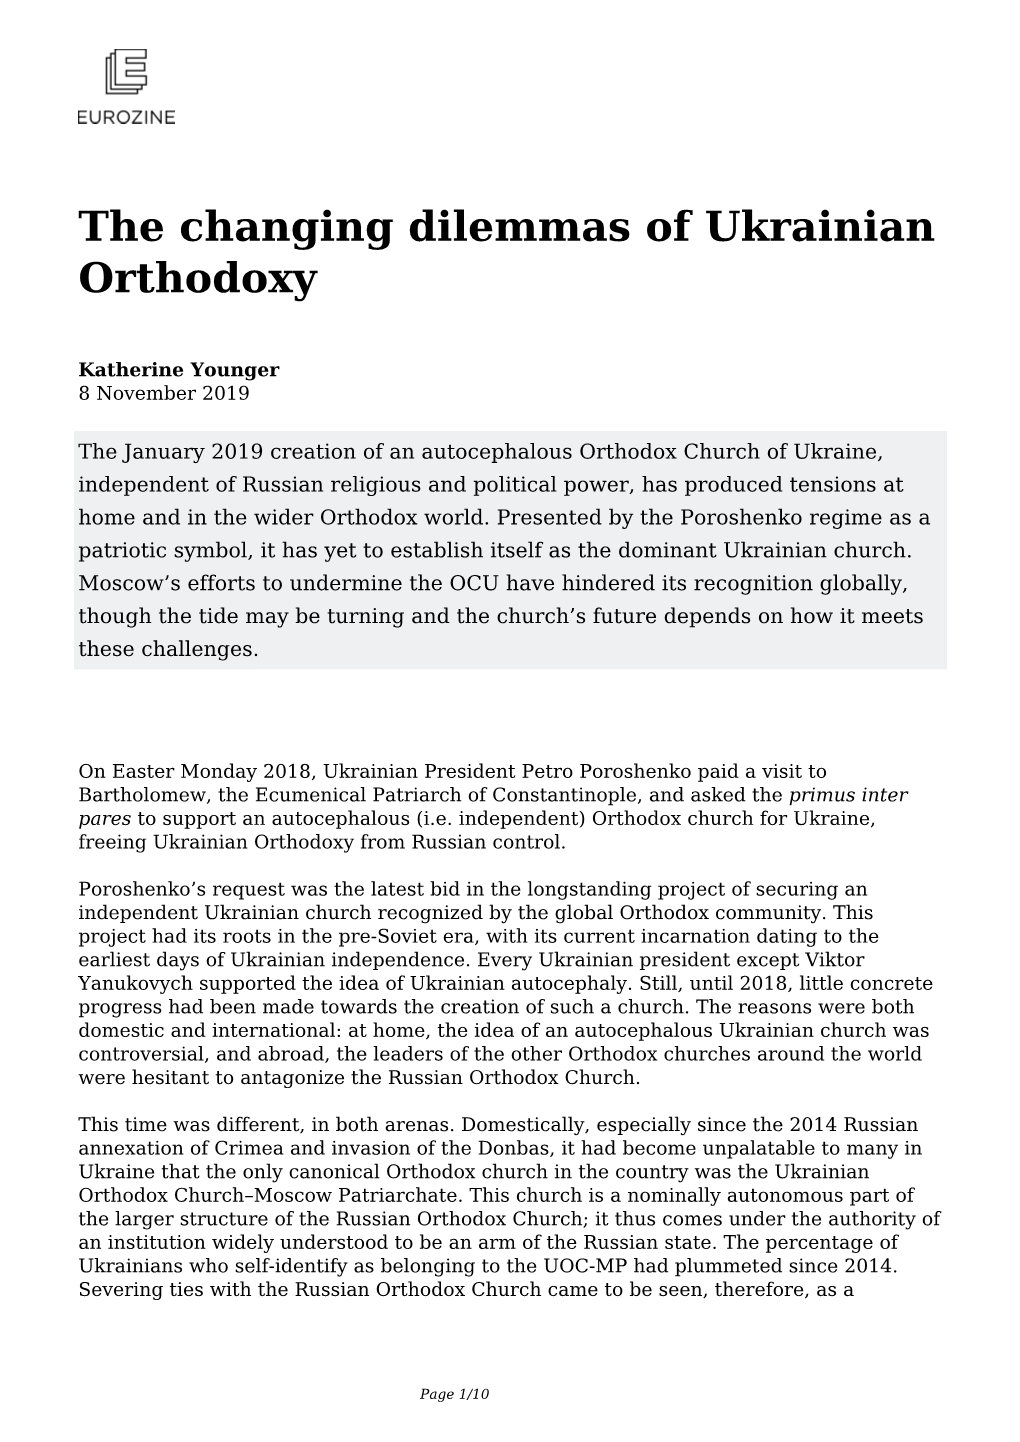 The Changing Dilemmas of Ukrainian Orthodoxy